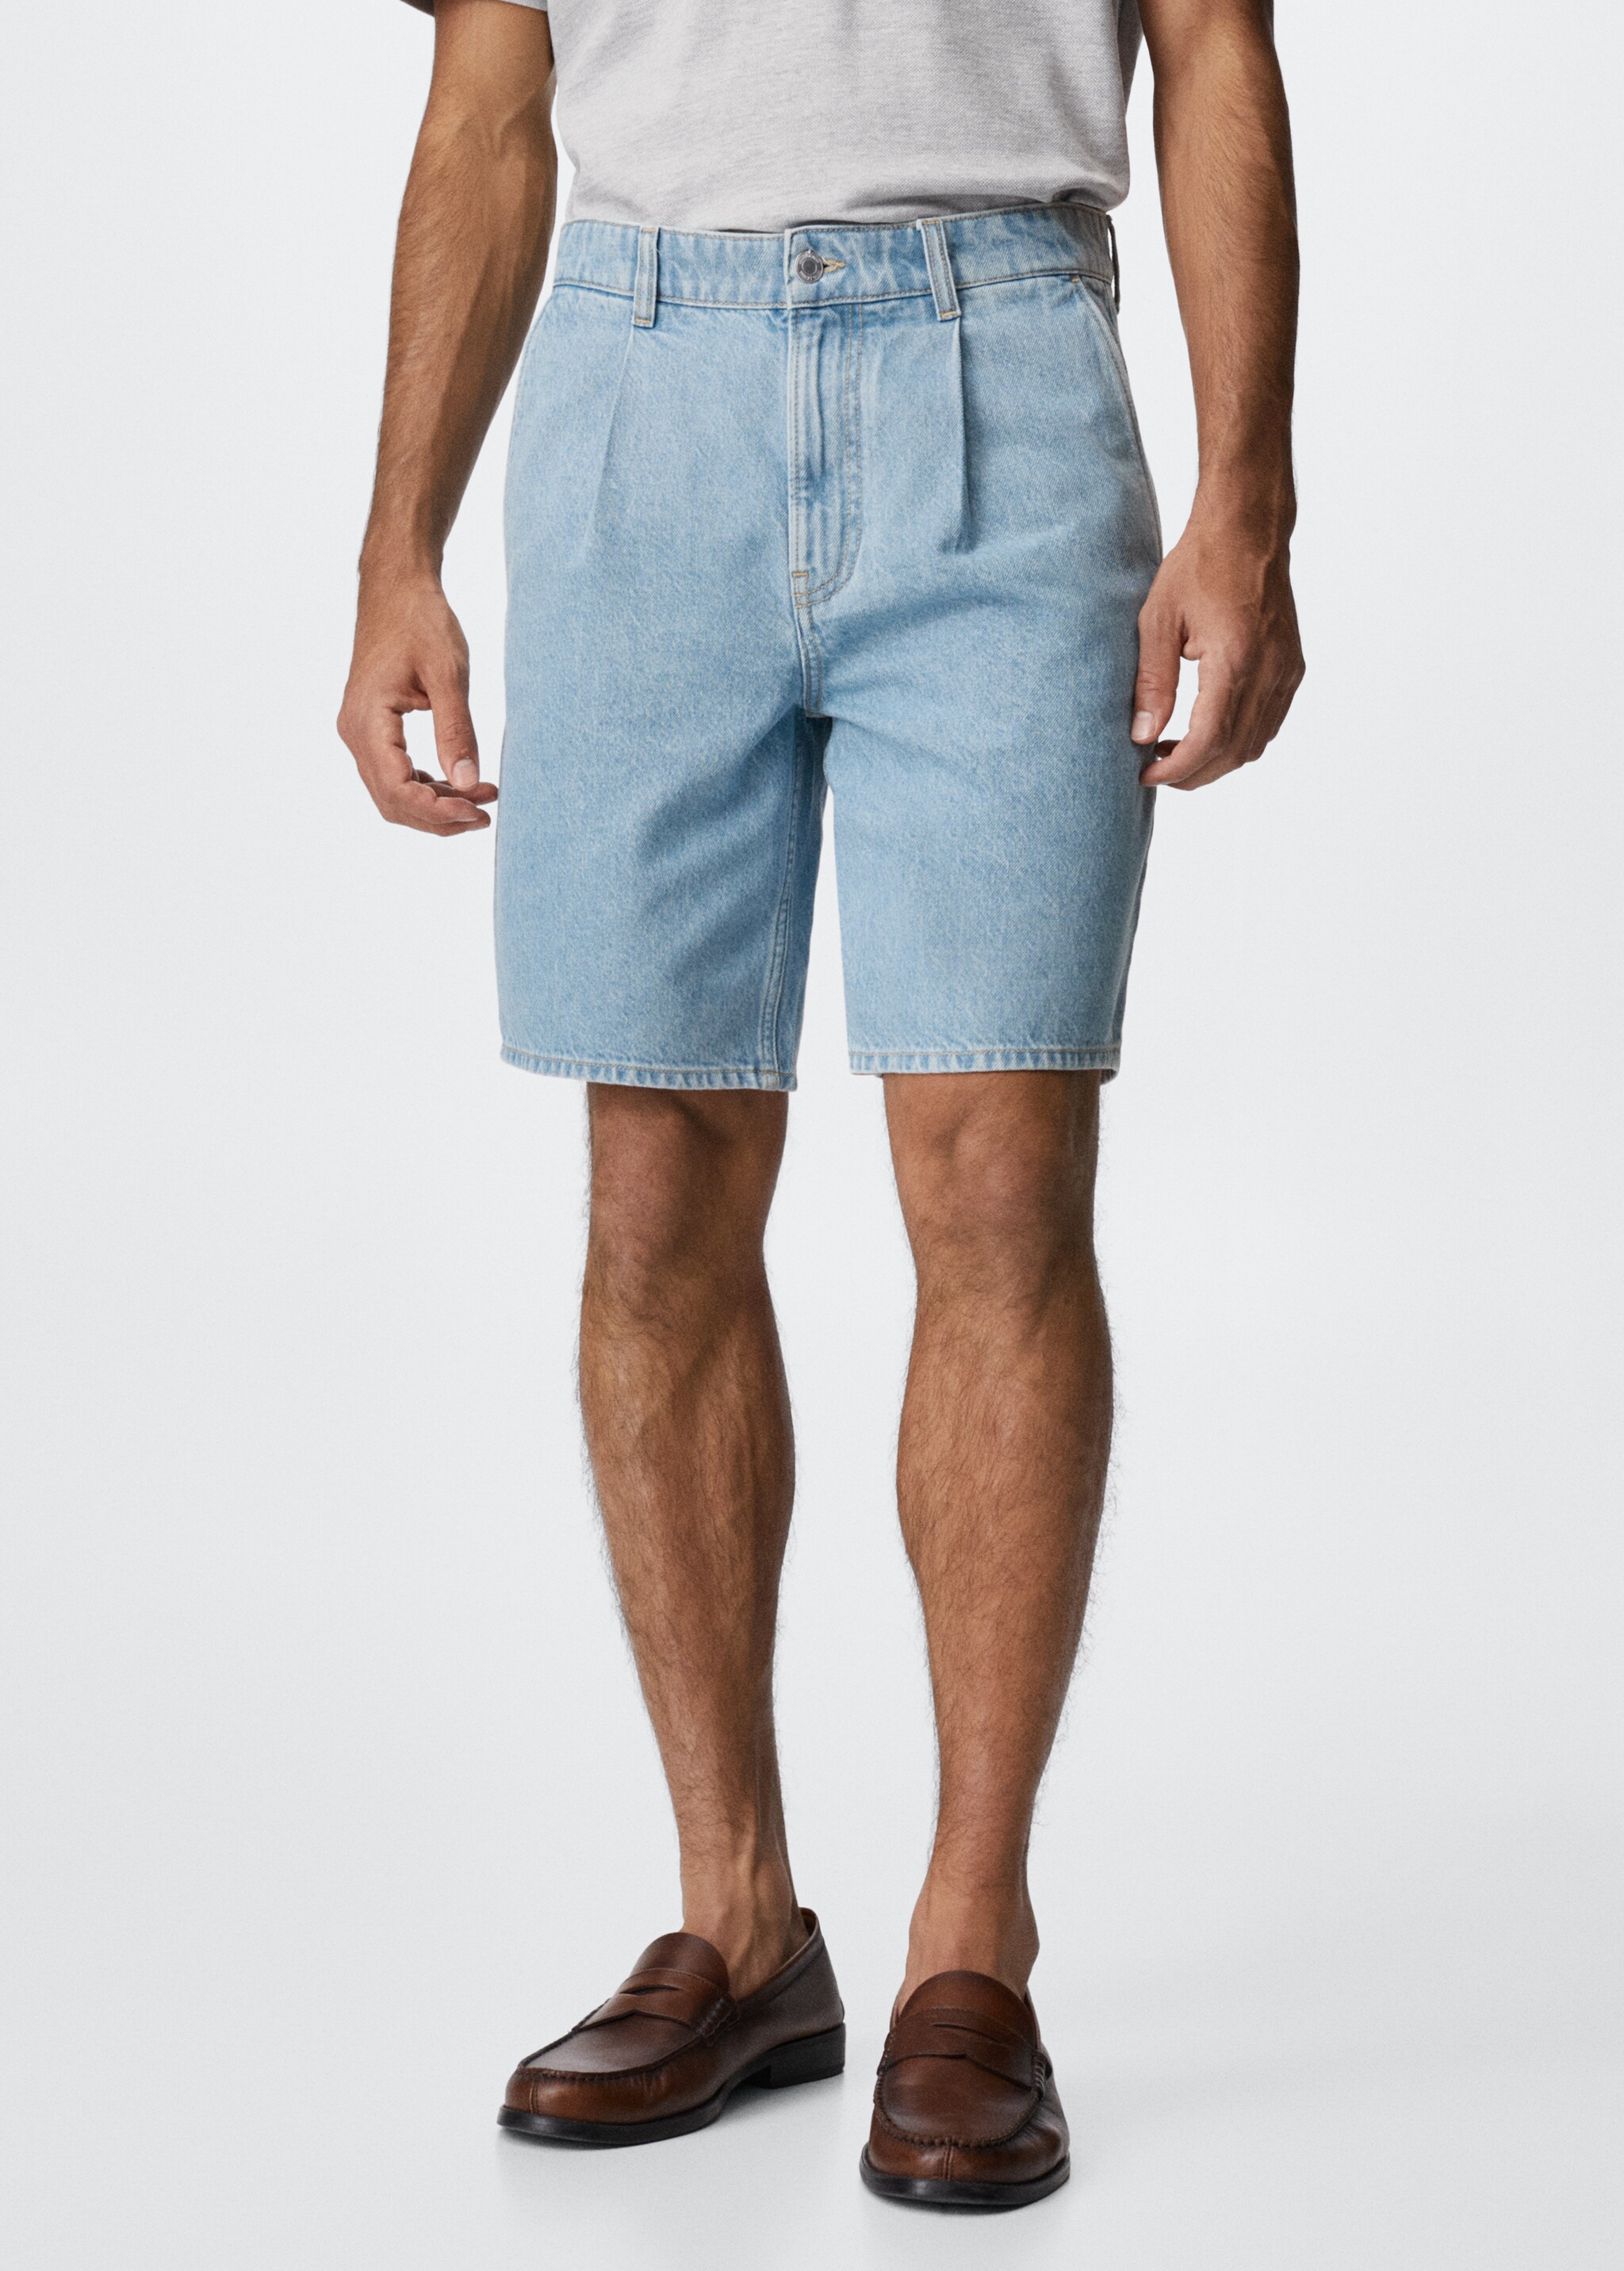 Pleated denim Bermuda shorts - Medium plane